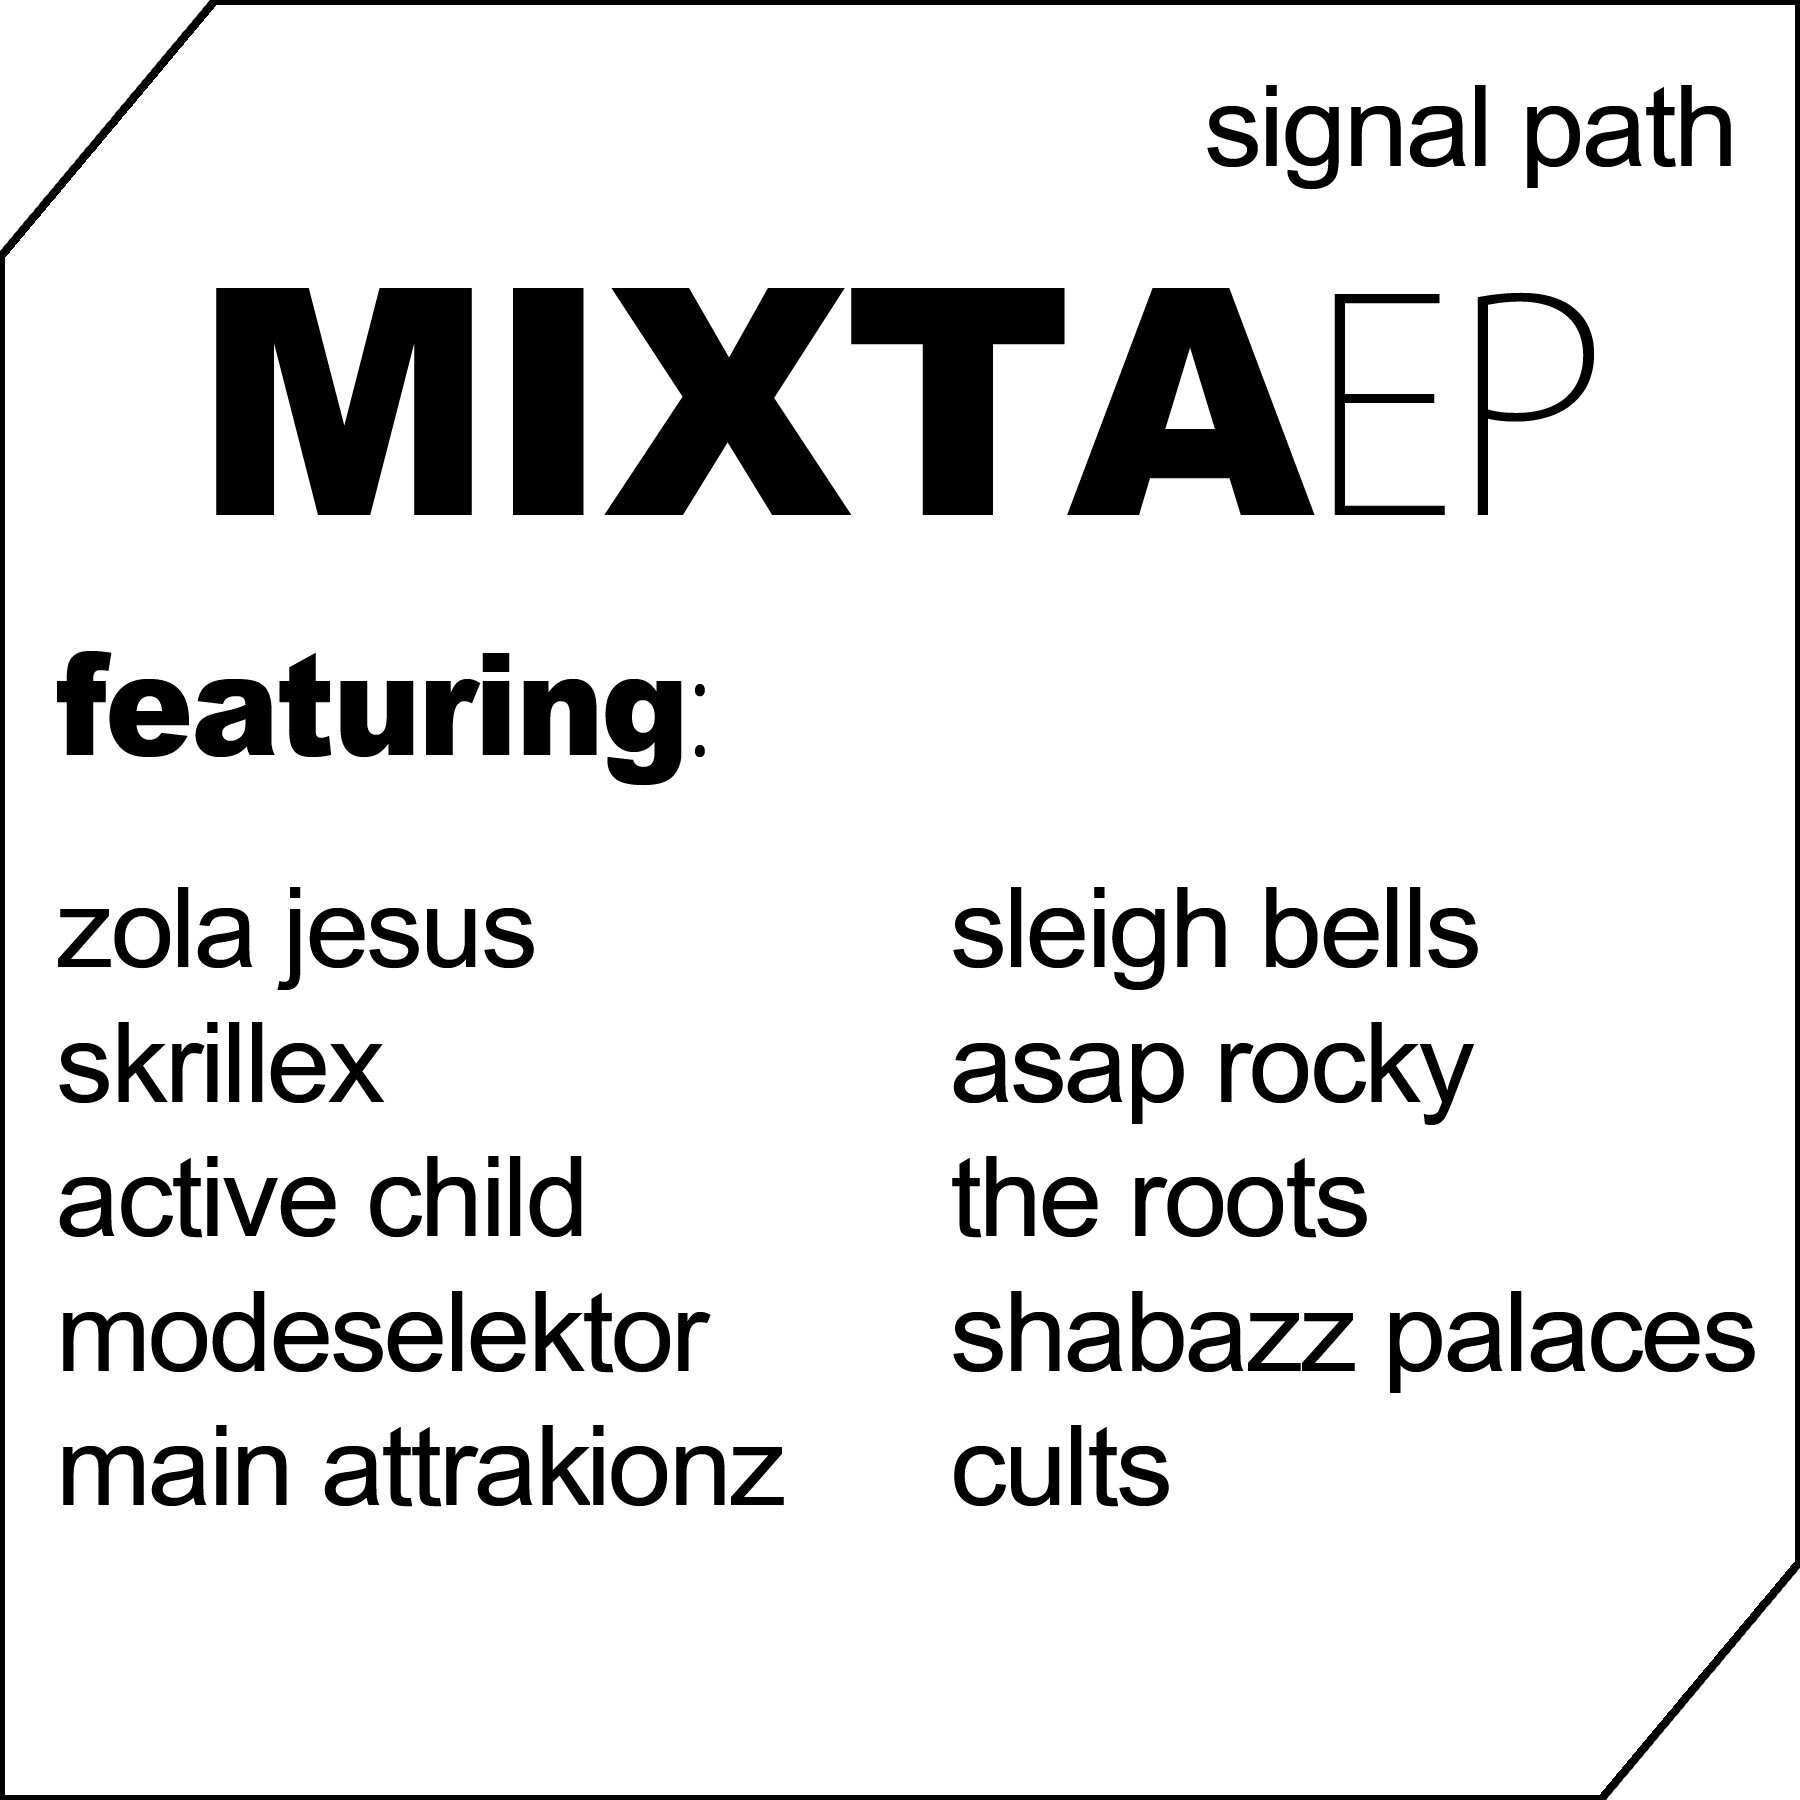 signal path mixtaep